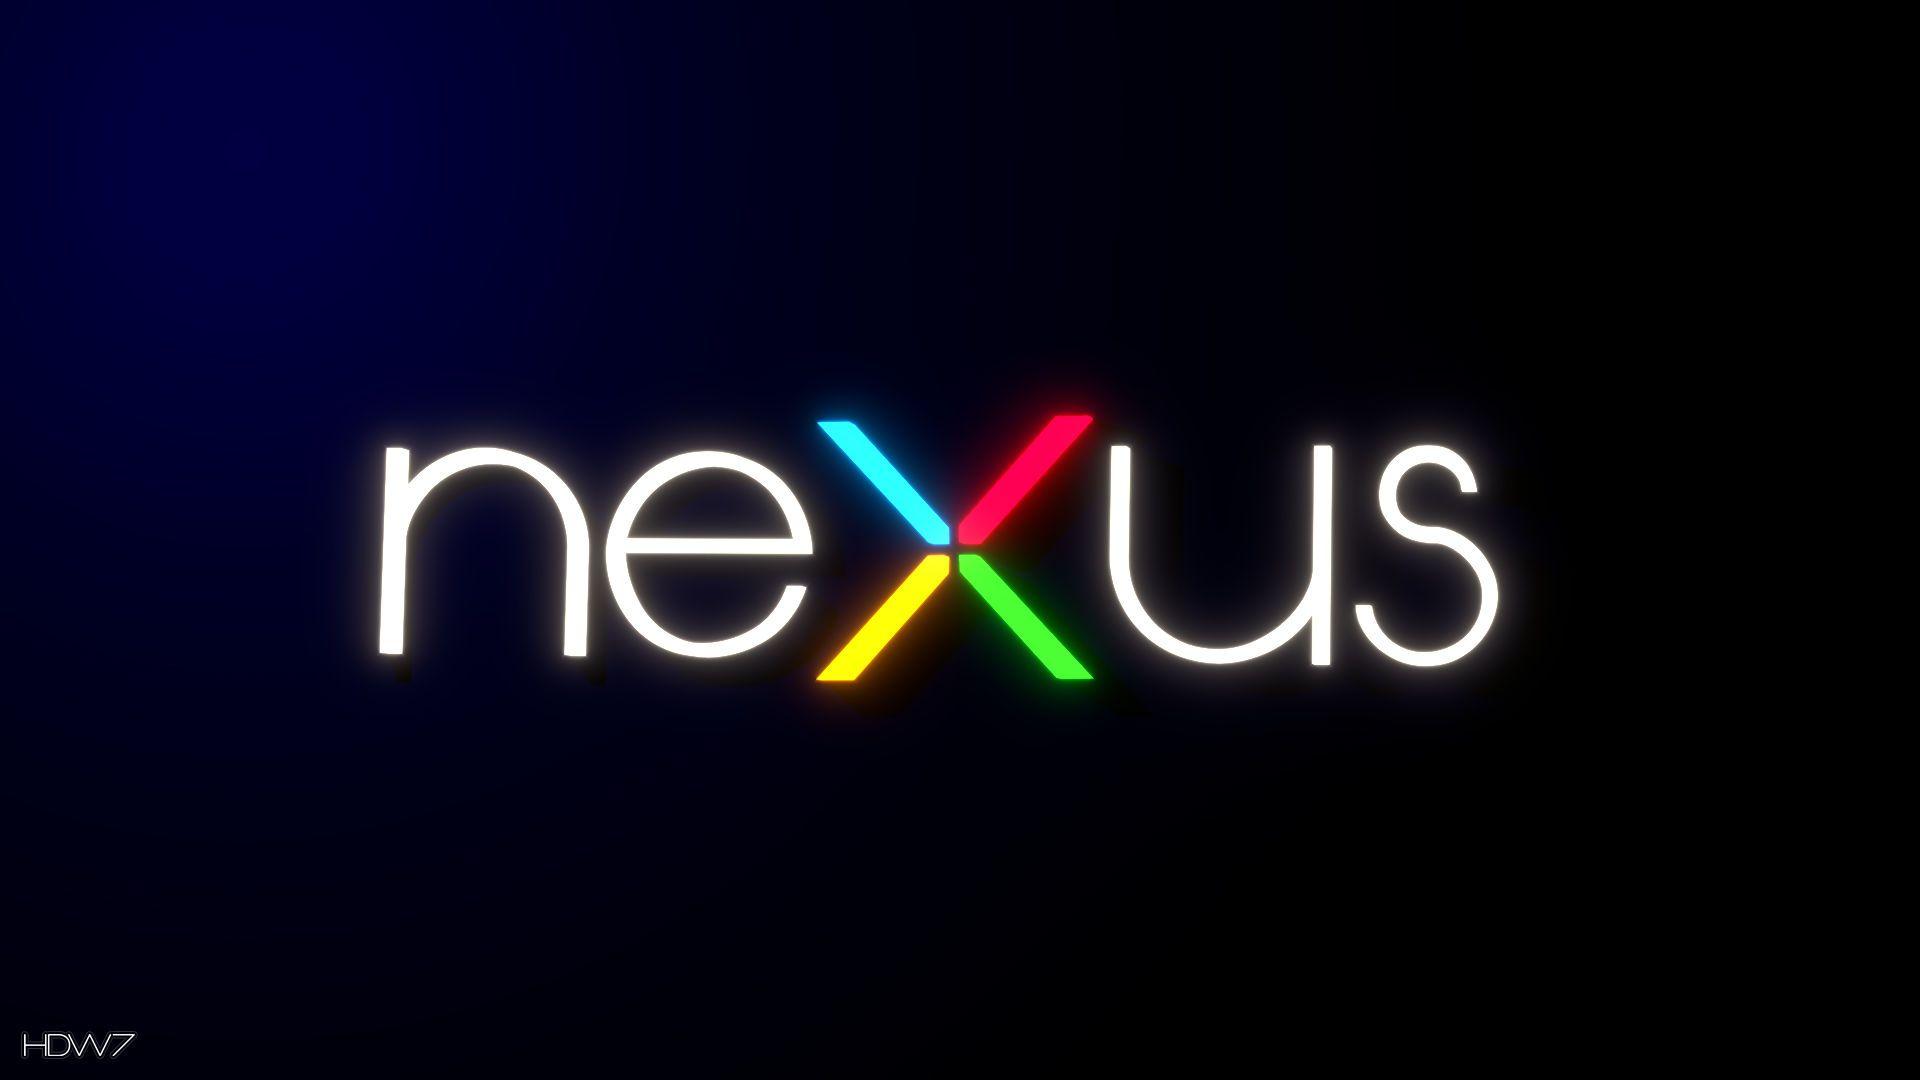 nexus logo. HD WALLPAPERS GALLERY